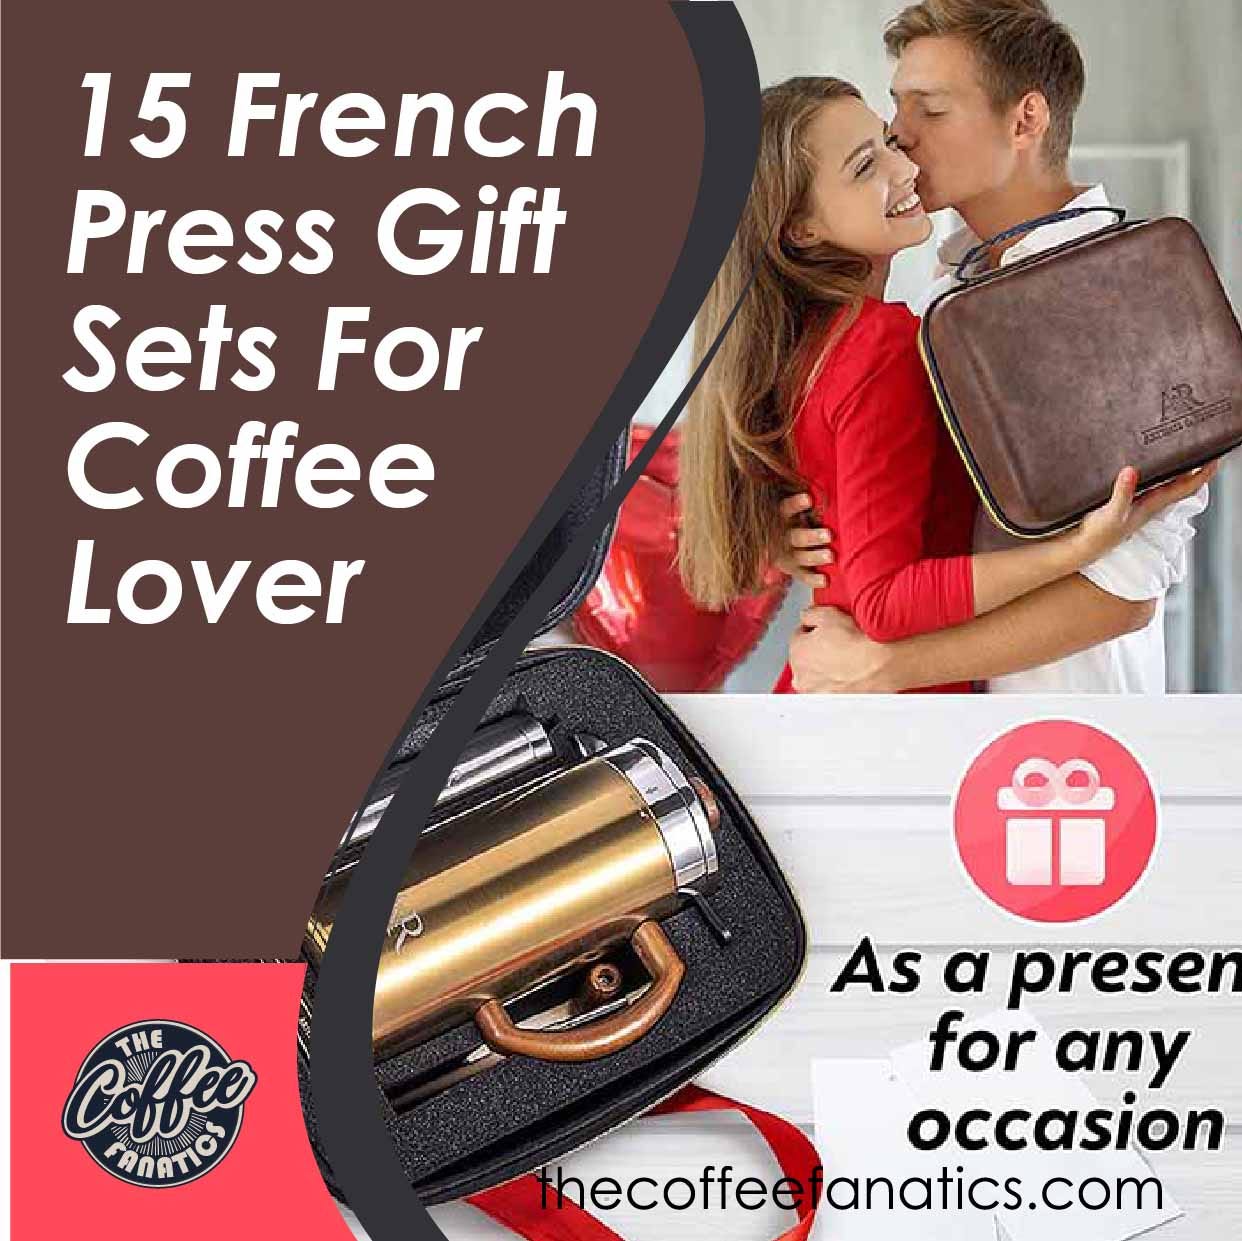 French Press Starter Kit - Gift Set